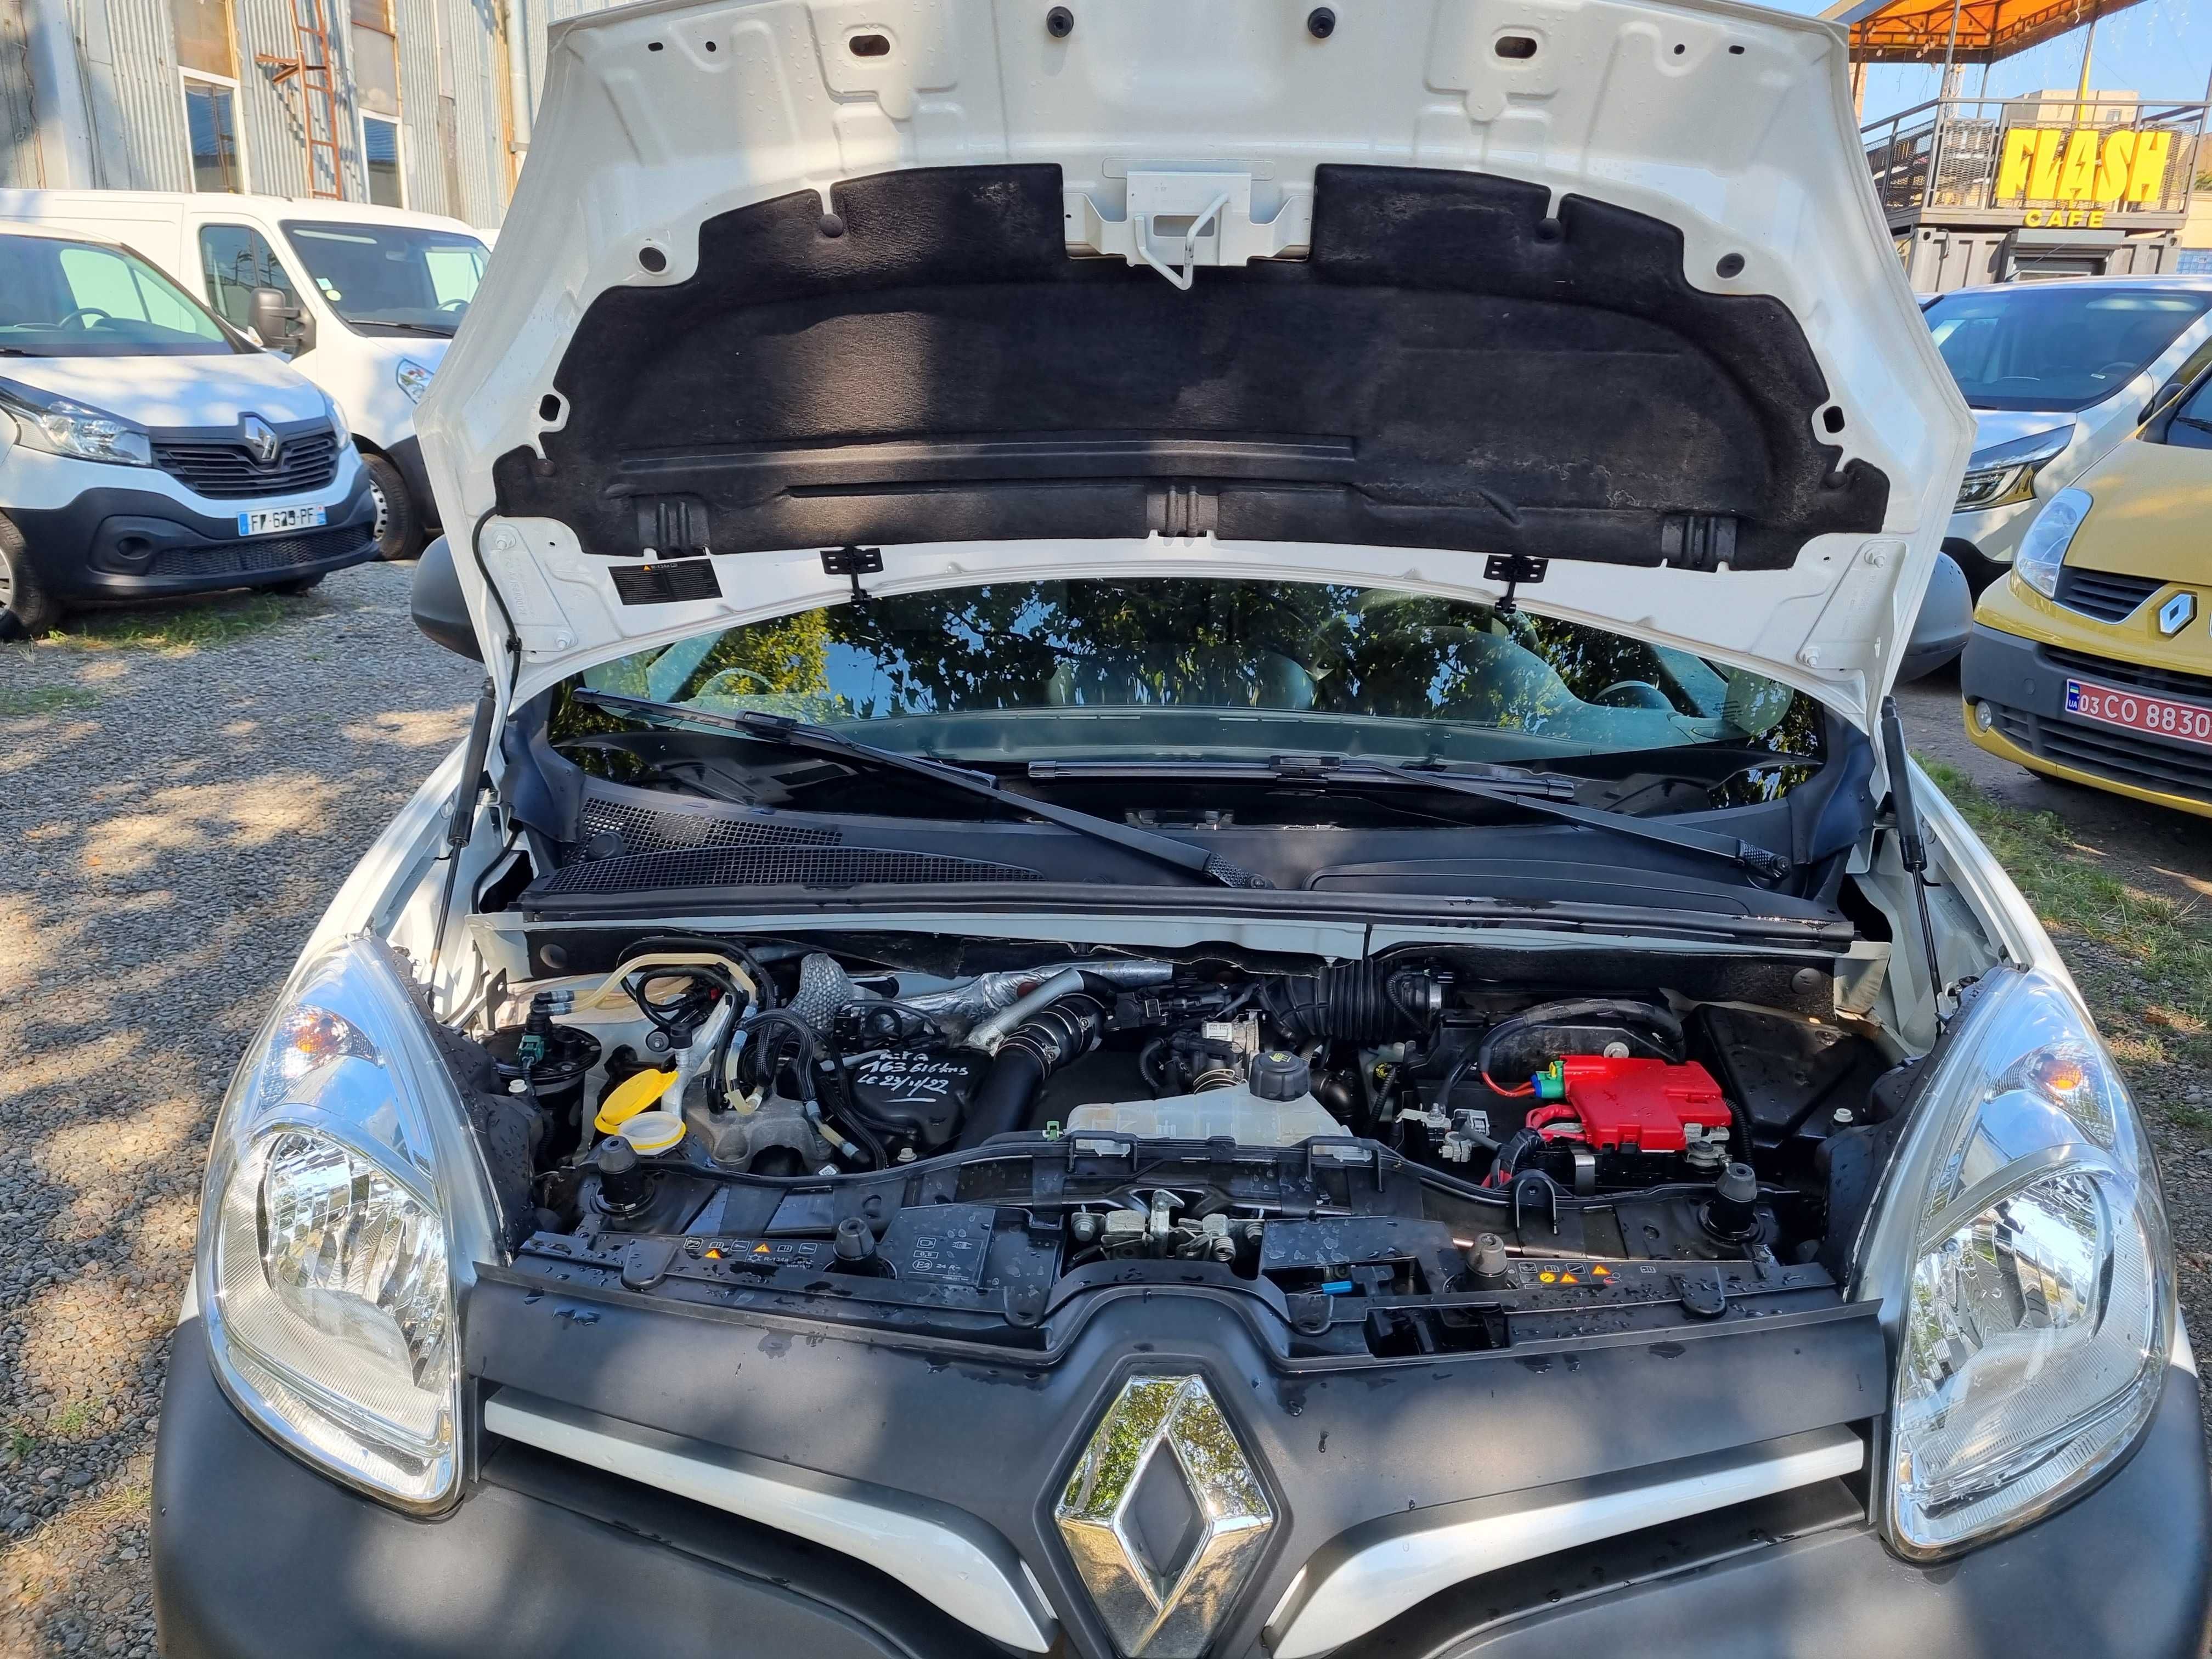 Renault Kangoo 2019 3места 173 т.км Navi AC